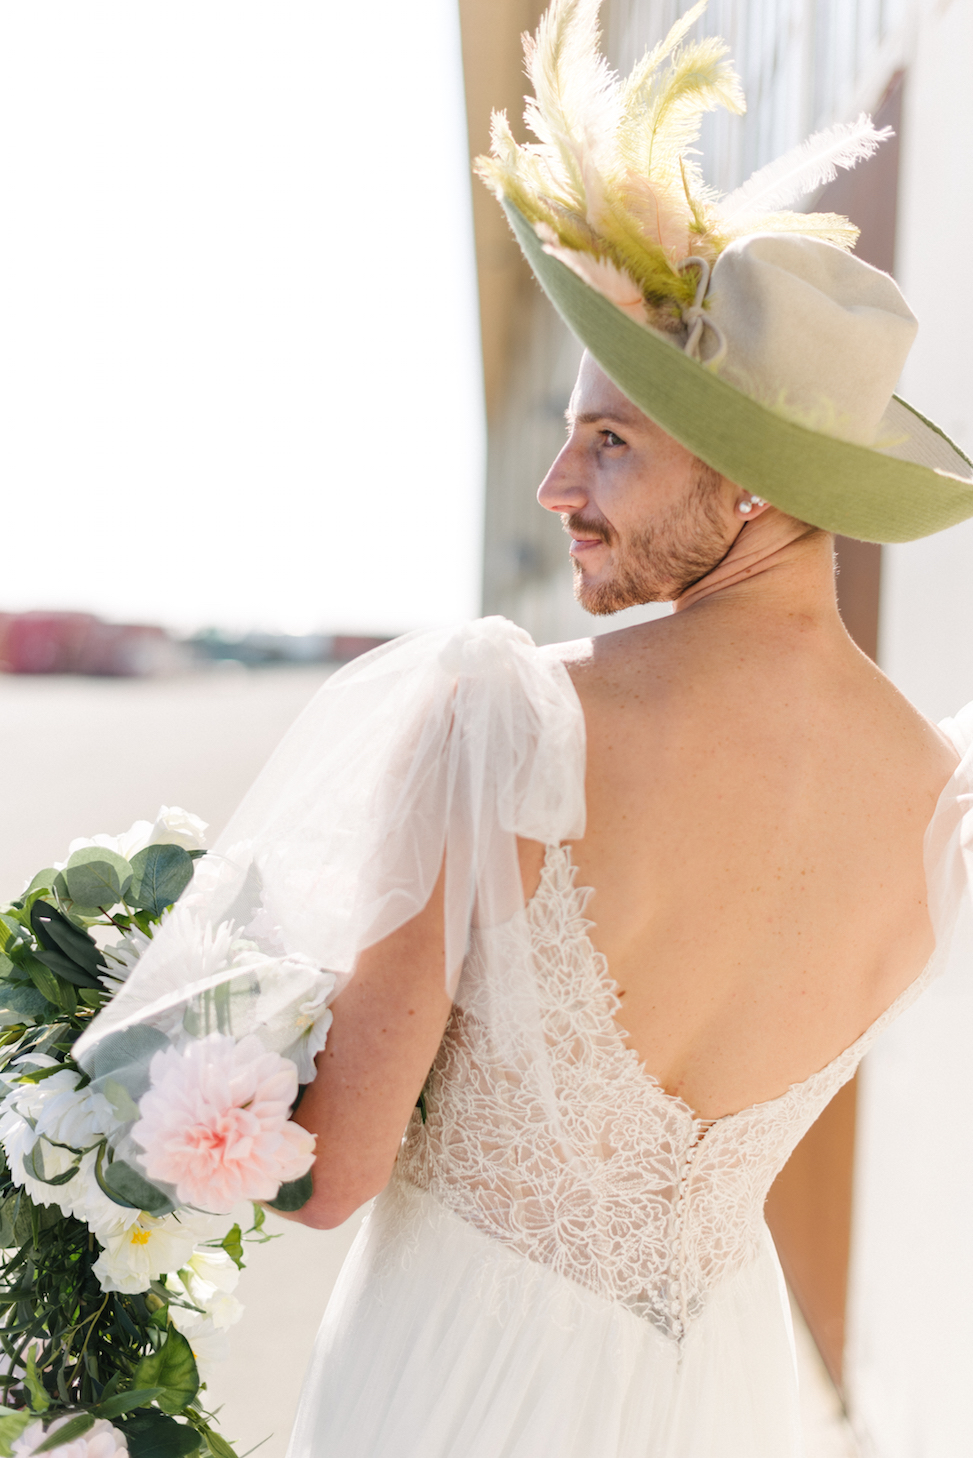 Photo of a man's back as he wears a wedding dress.